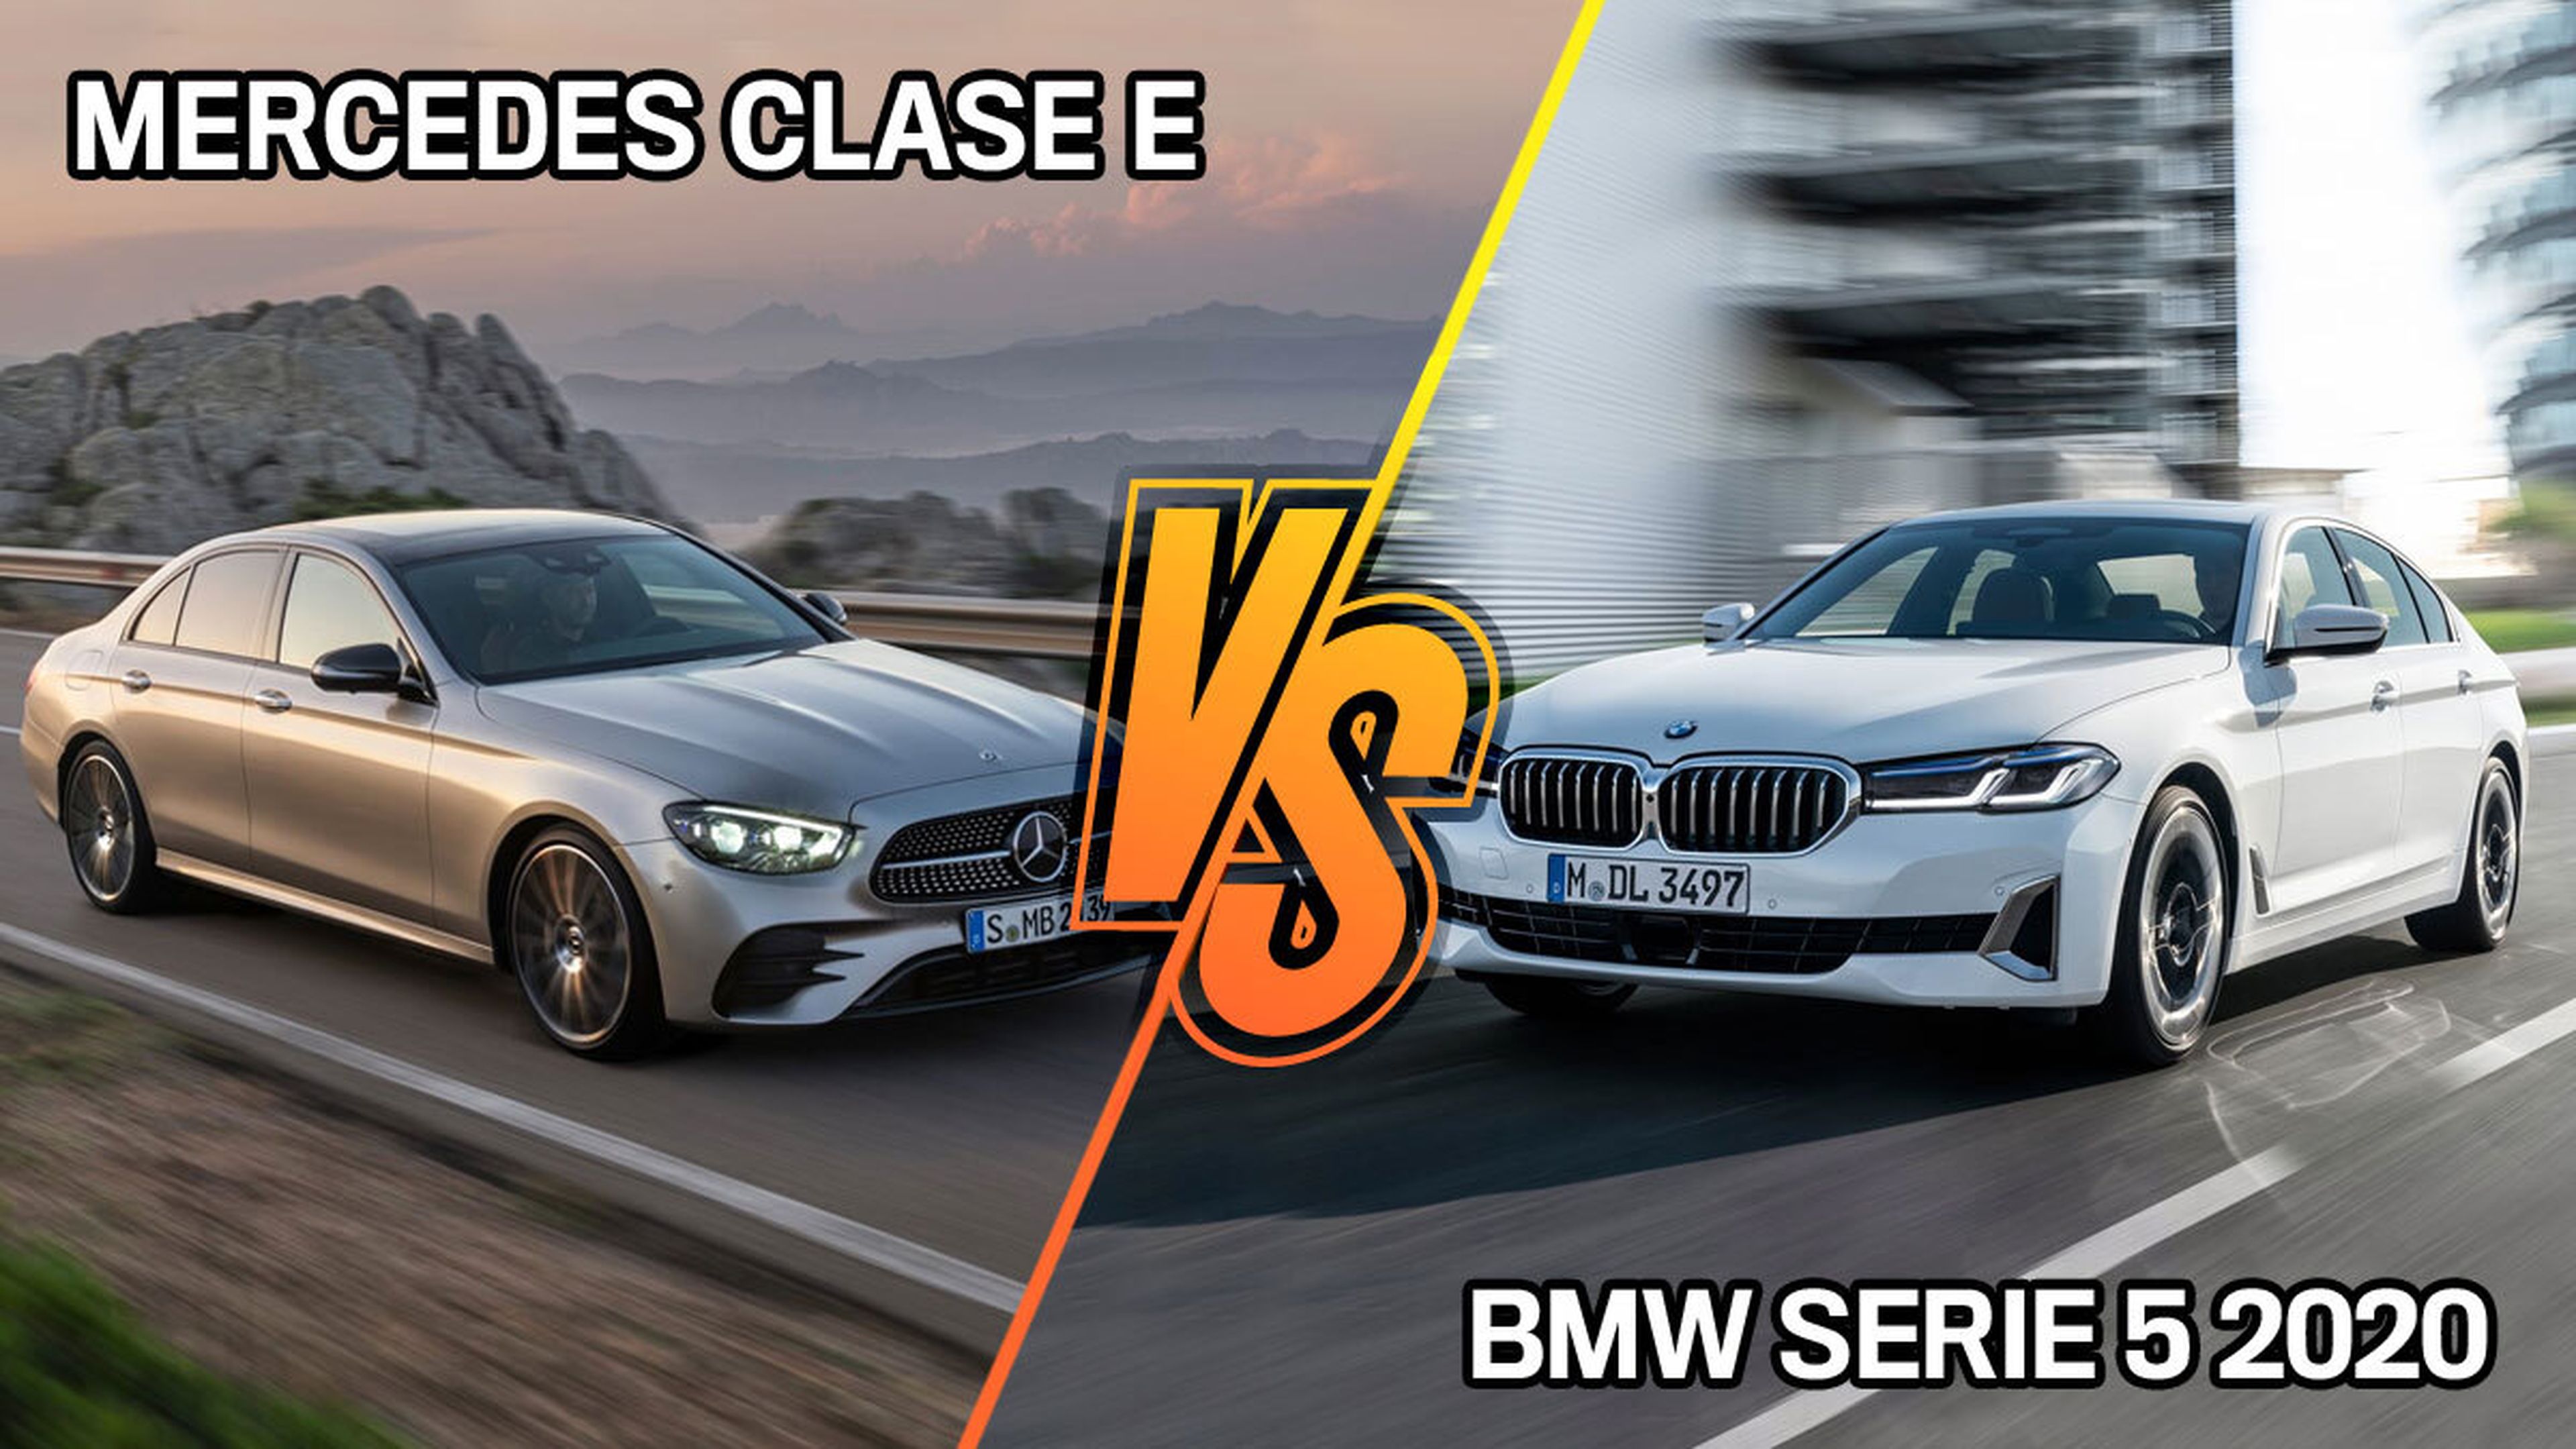 Mercedes Clase E o BMW Serie 5 2020, ¿cuál tiene mejores versiones híbridas?